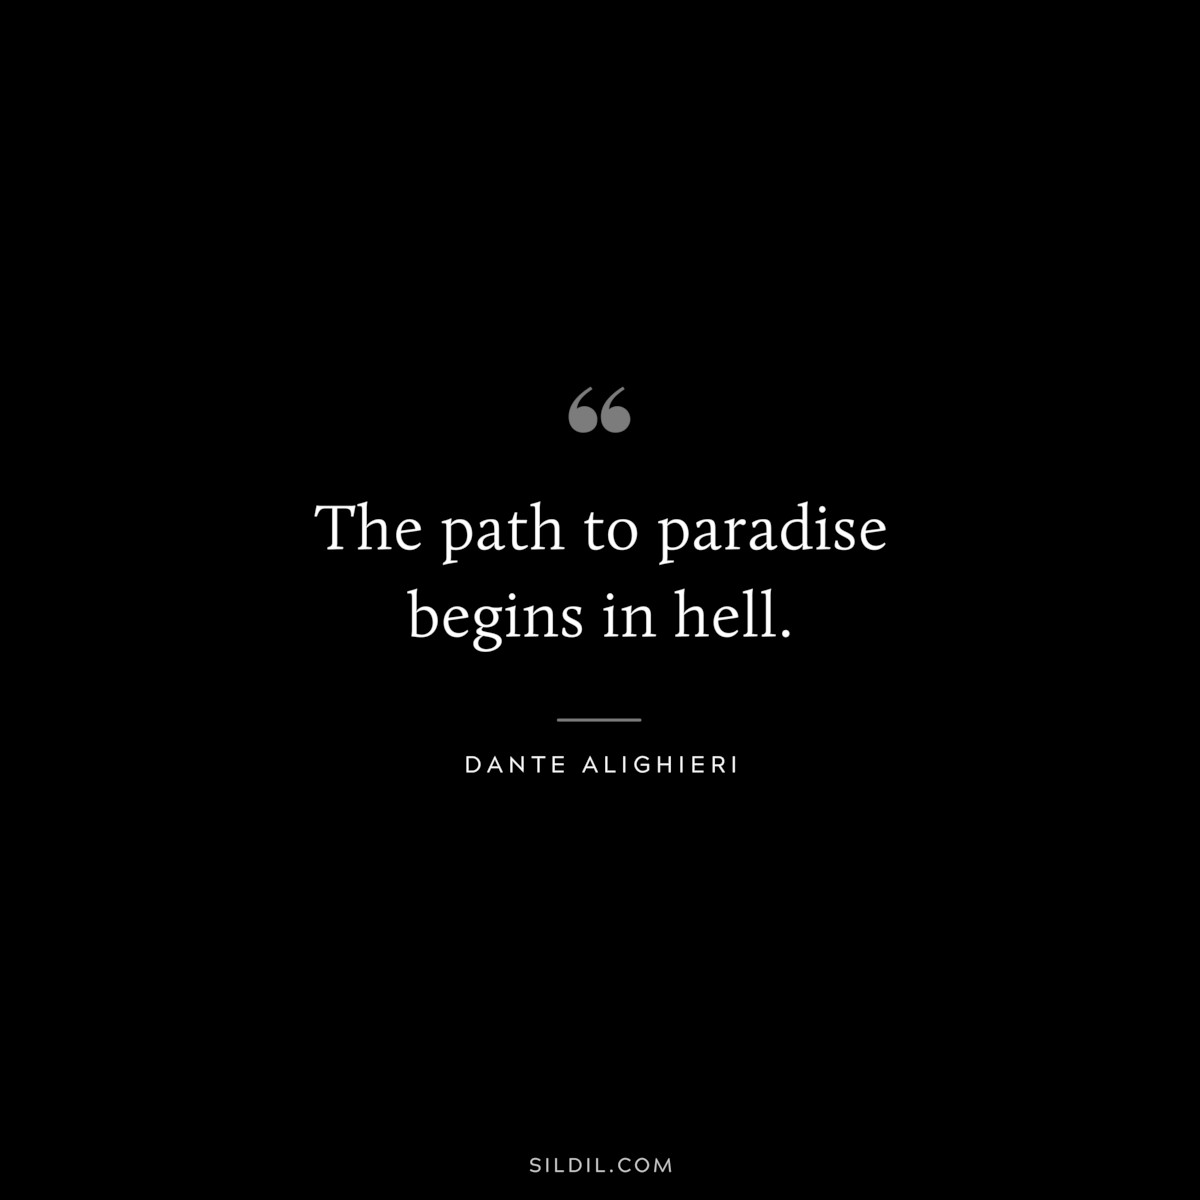 The path to paradise begins in hell. ― Dante Alighieri